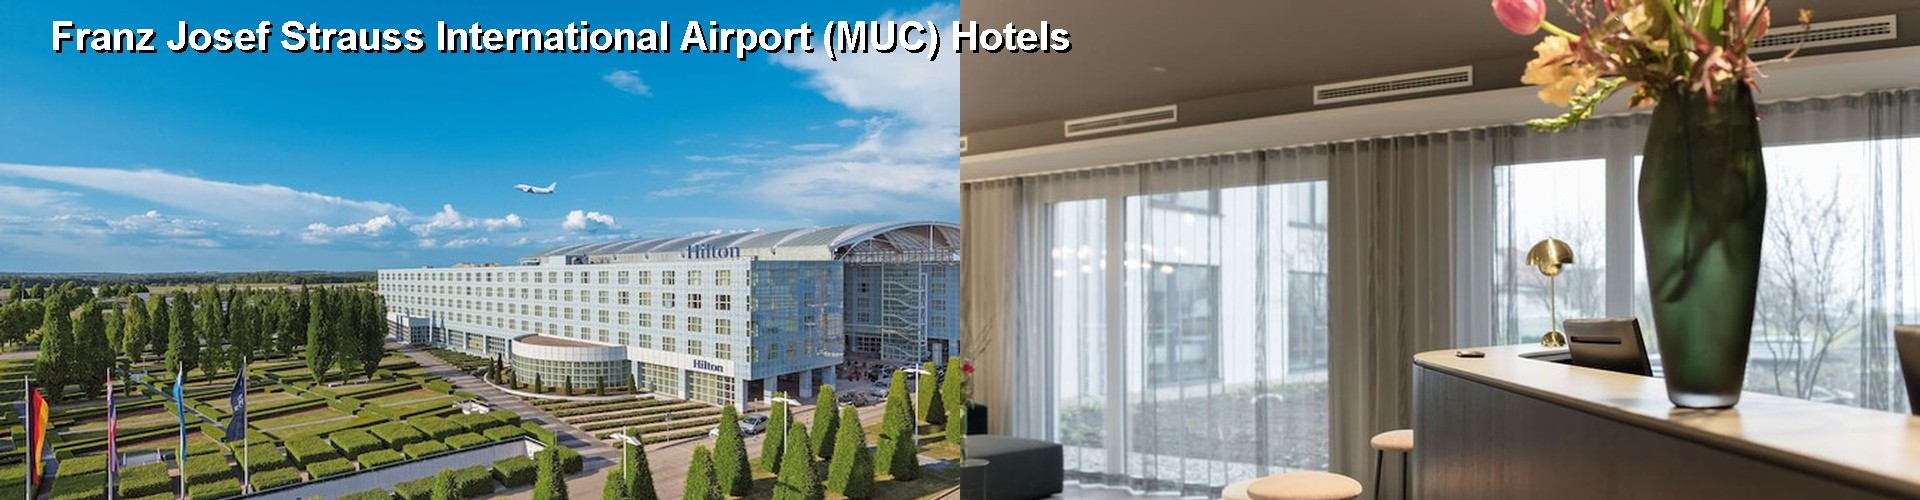 5 Best Hotels near Franz Josef Strauss International Airport (MUC)